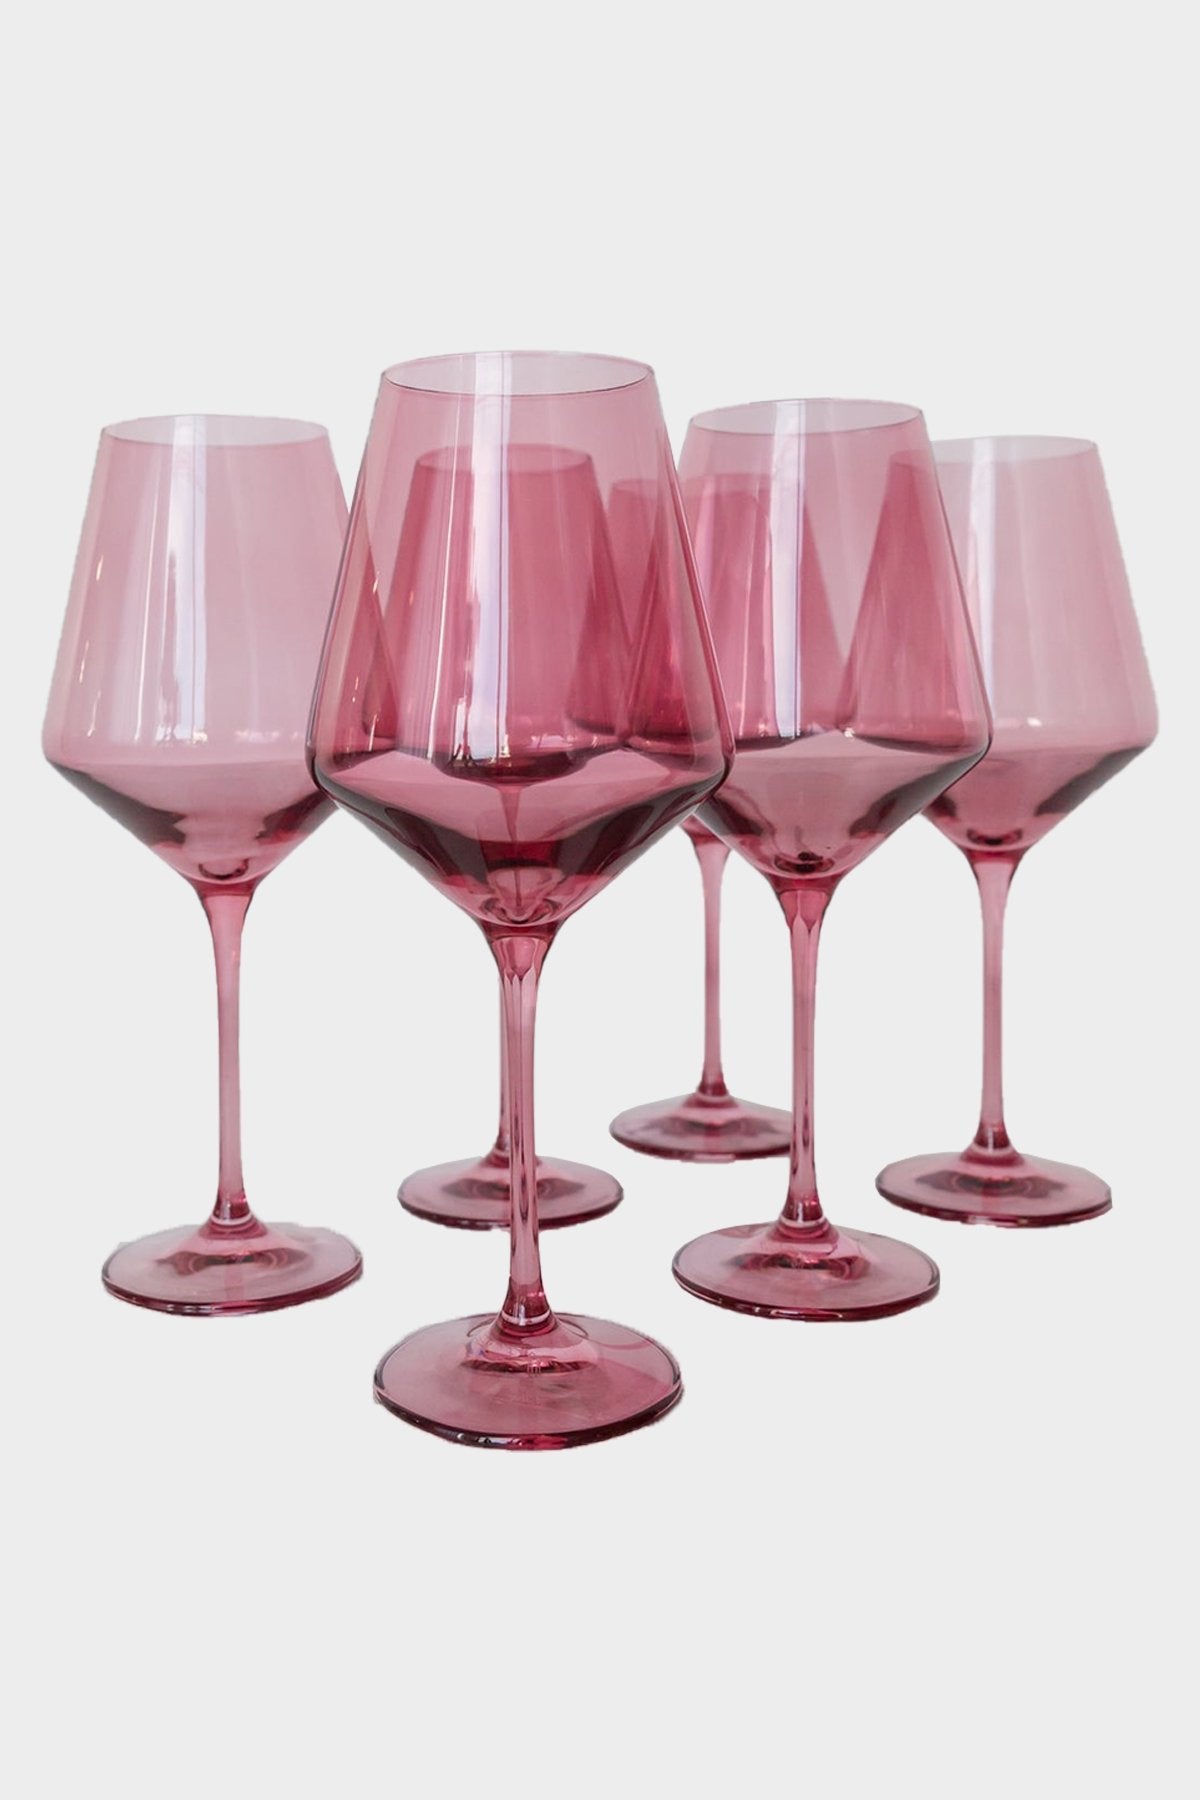 Wine Stemware Glass in Rose - Set of 6 - shop-olivia.com